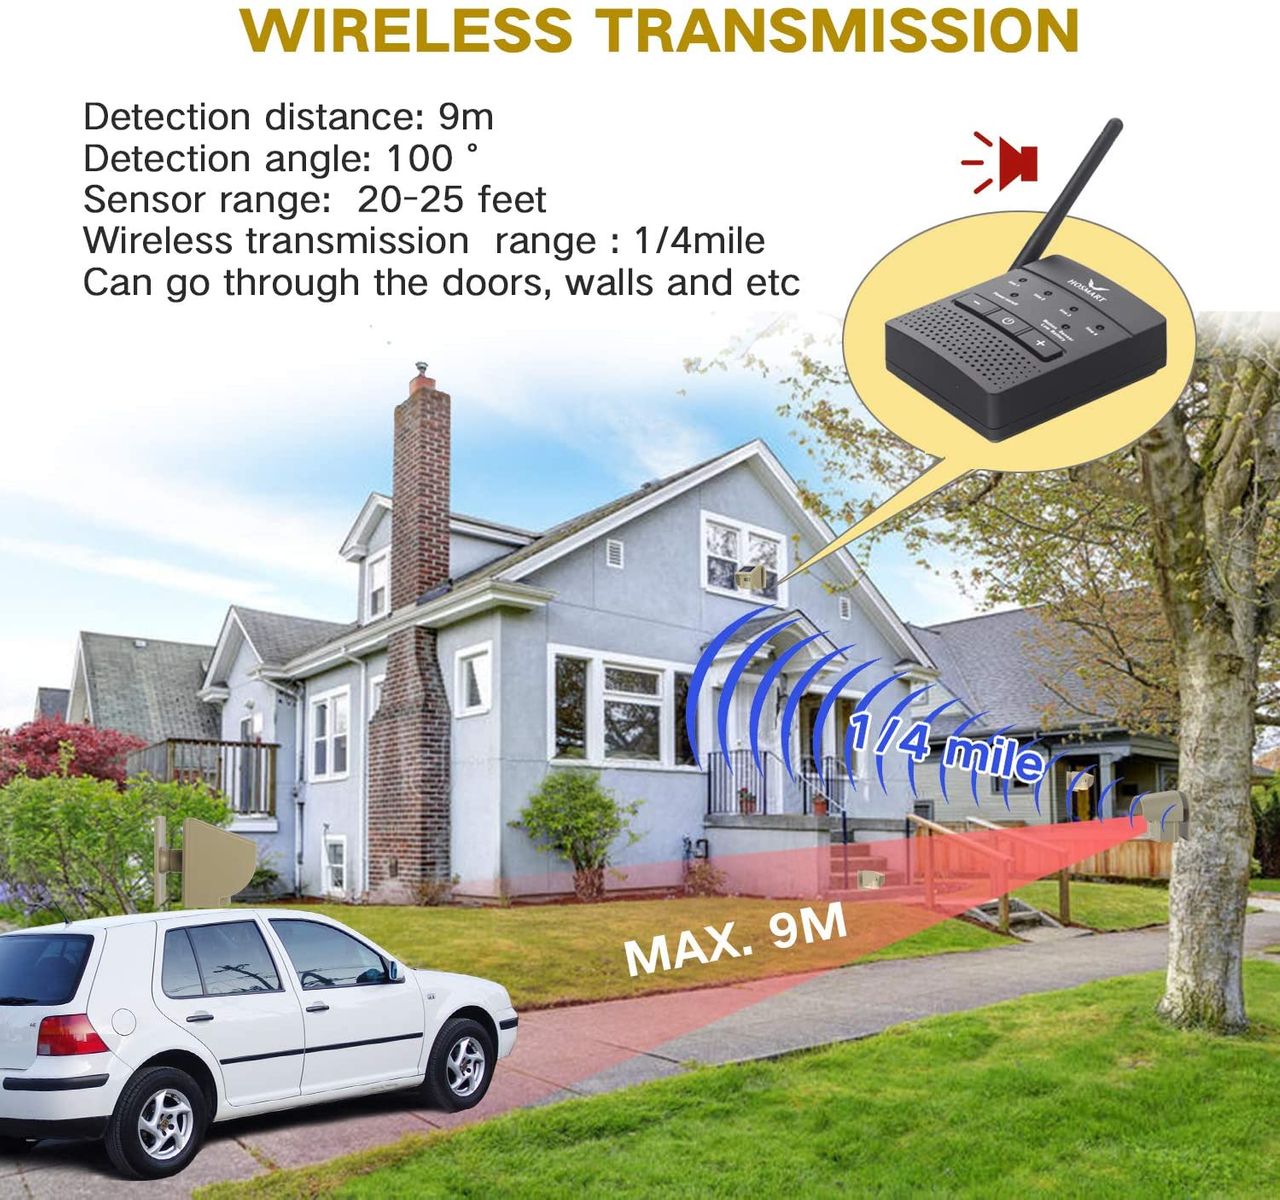 Hosmart Wireless sensor security system and entry alert sensor system, rechargeable, 1/2 mile reception, weatherproof, outdoor motion sensor and detector.